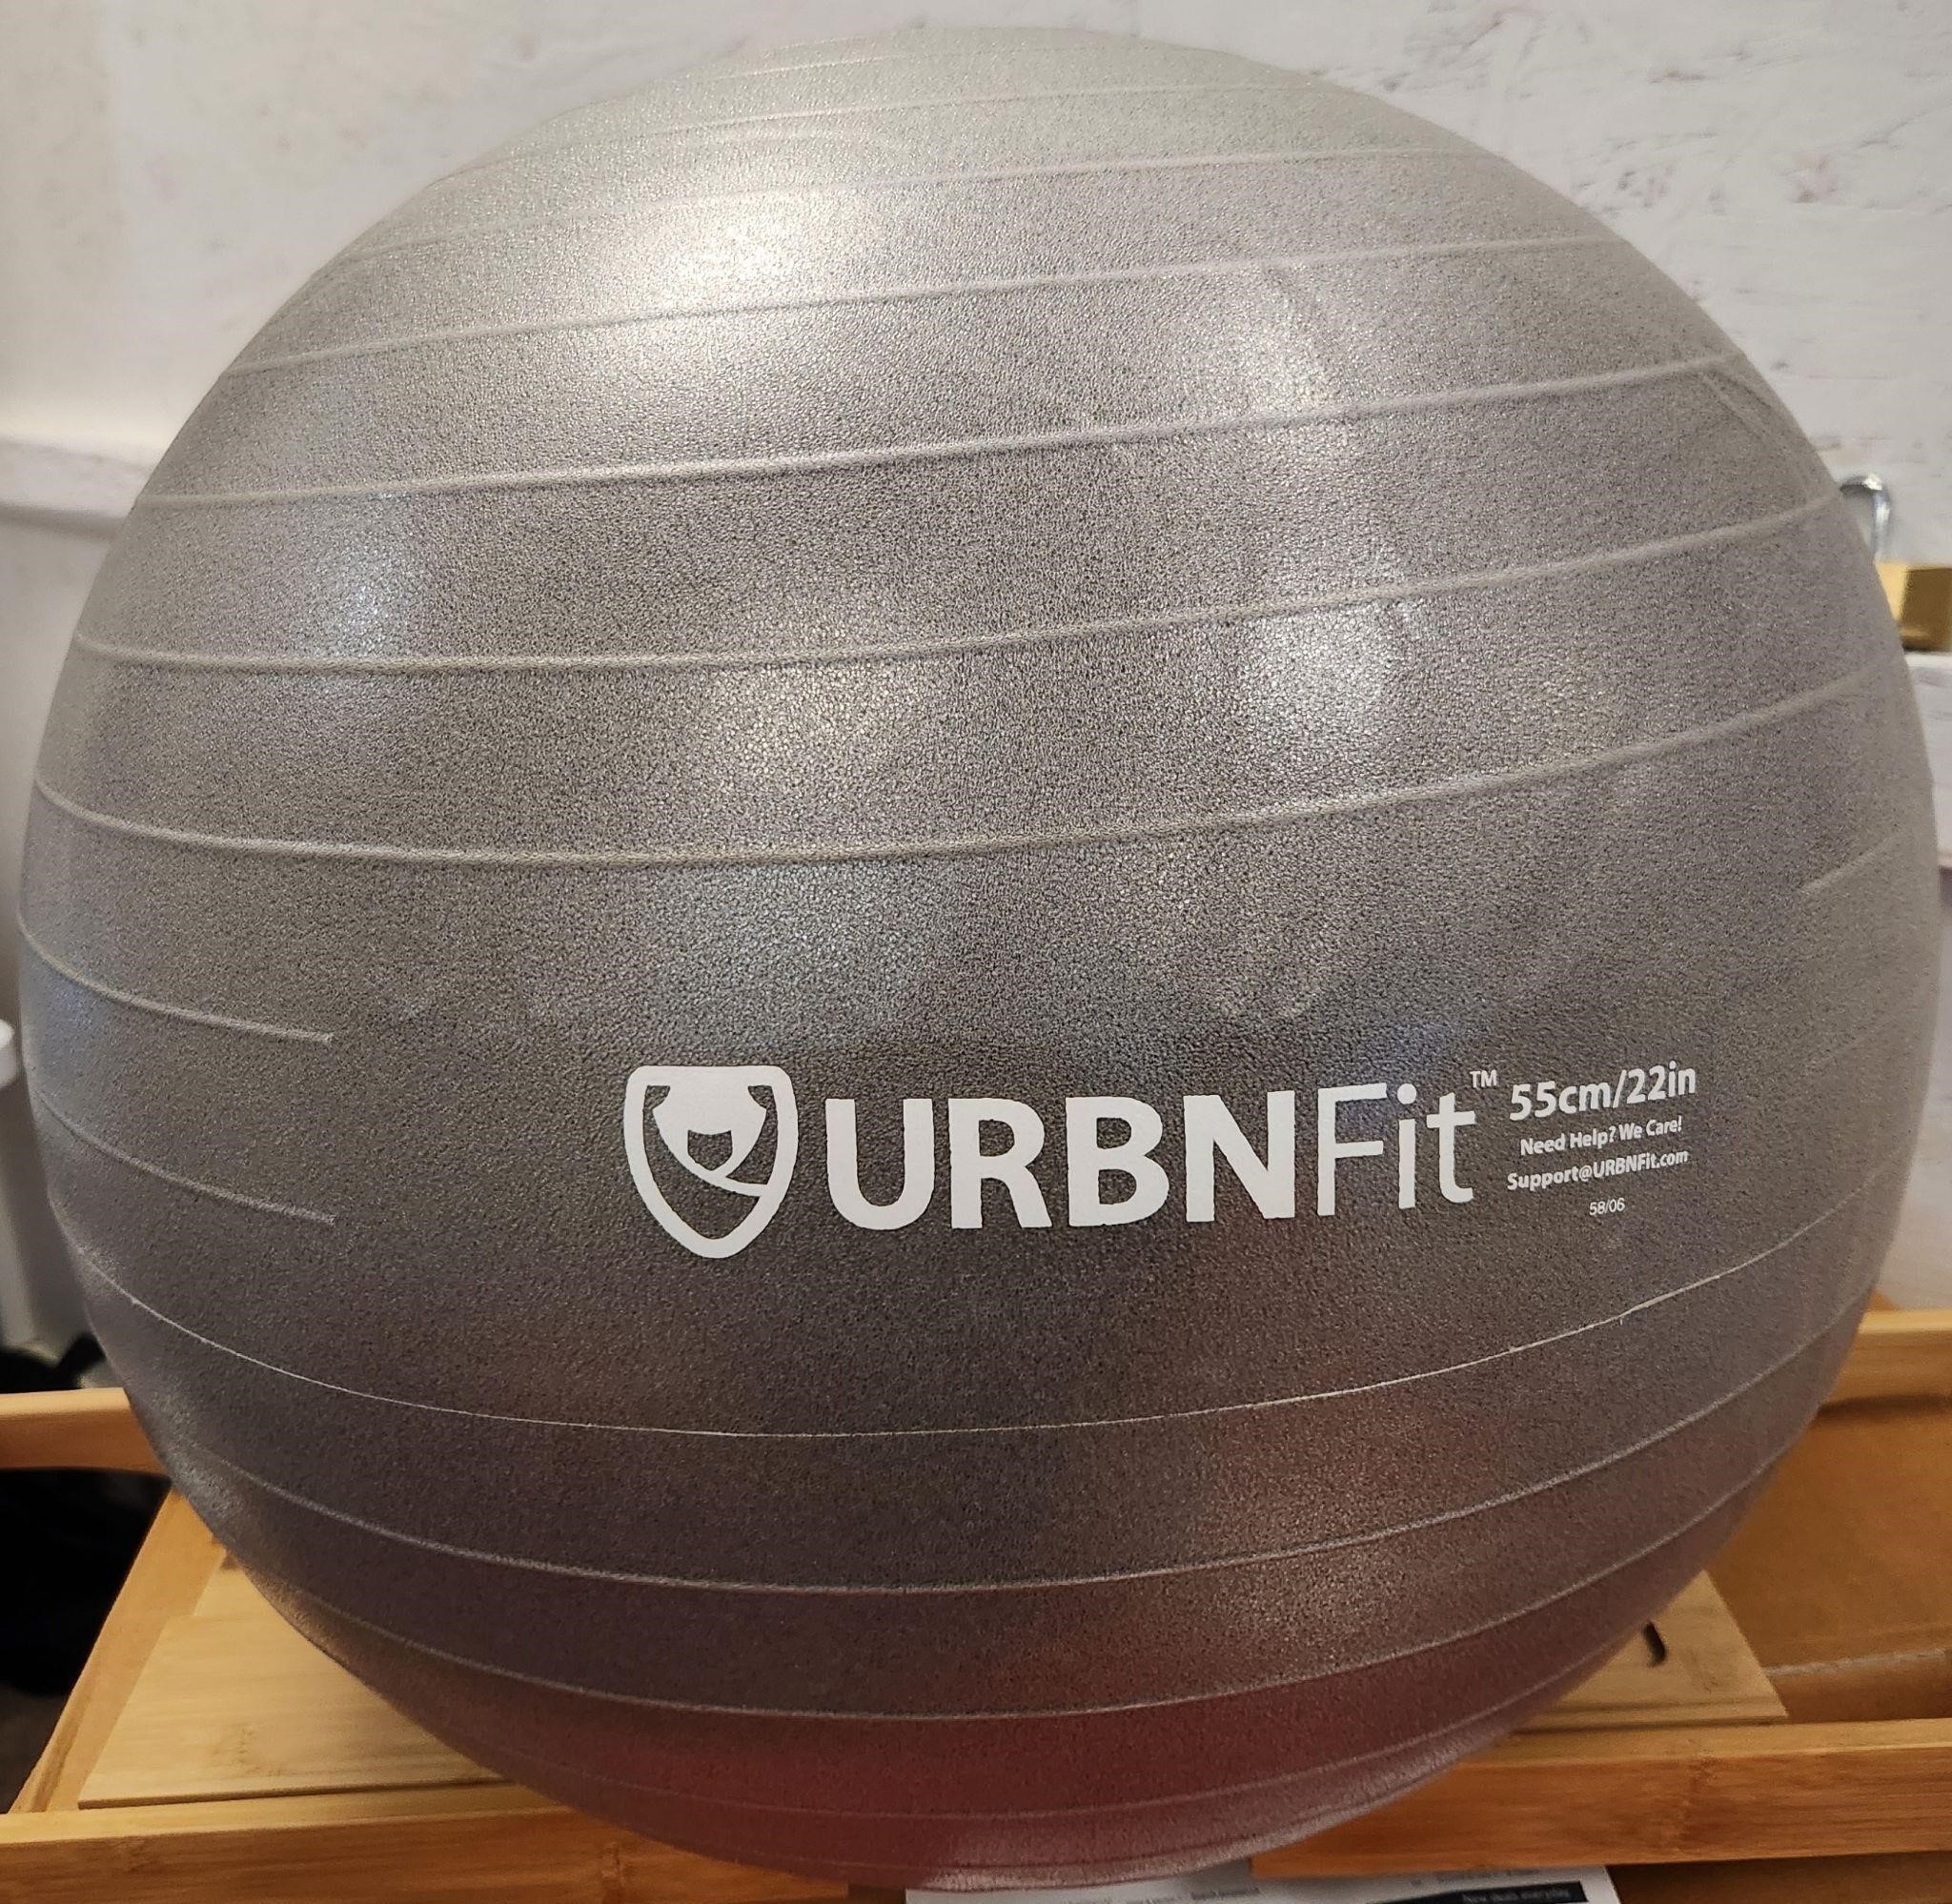 URBNFit Exercise Ball - Yoga Ball 22"